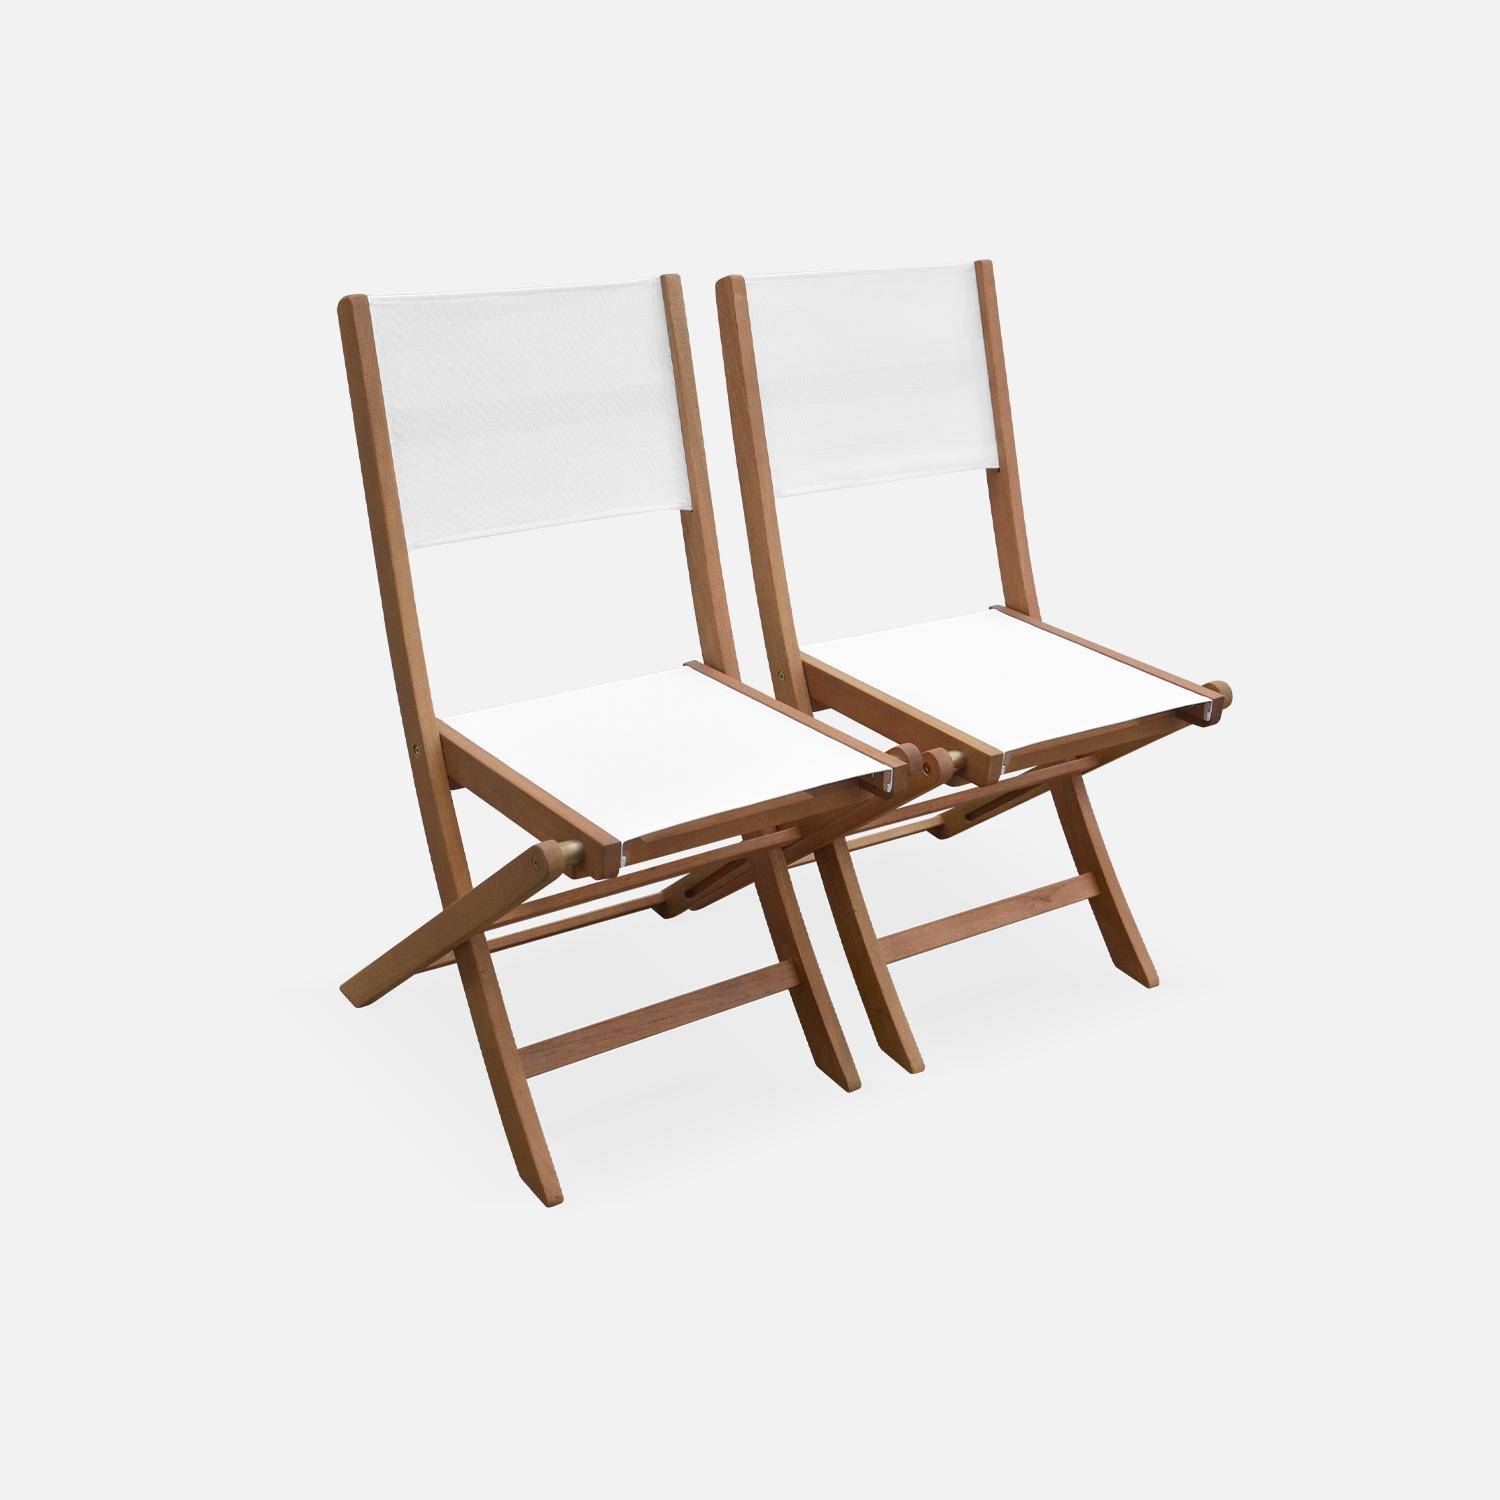 Conjunto de muebles de jardín de madera Almería, antracita, mesa rectangular 120-180cm, 6 sillas de eucalipto FSC y textilene Photo2